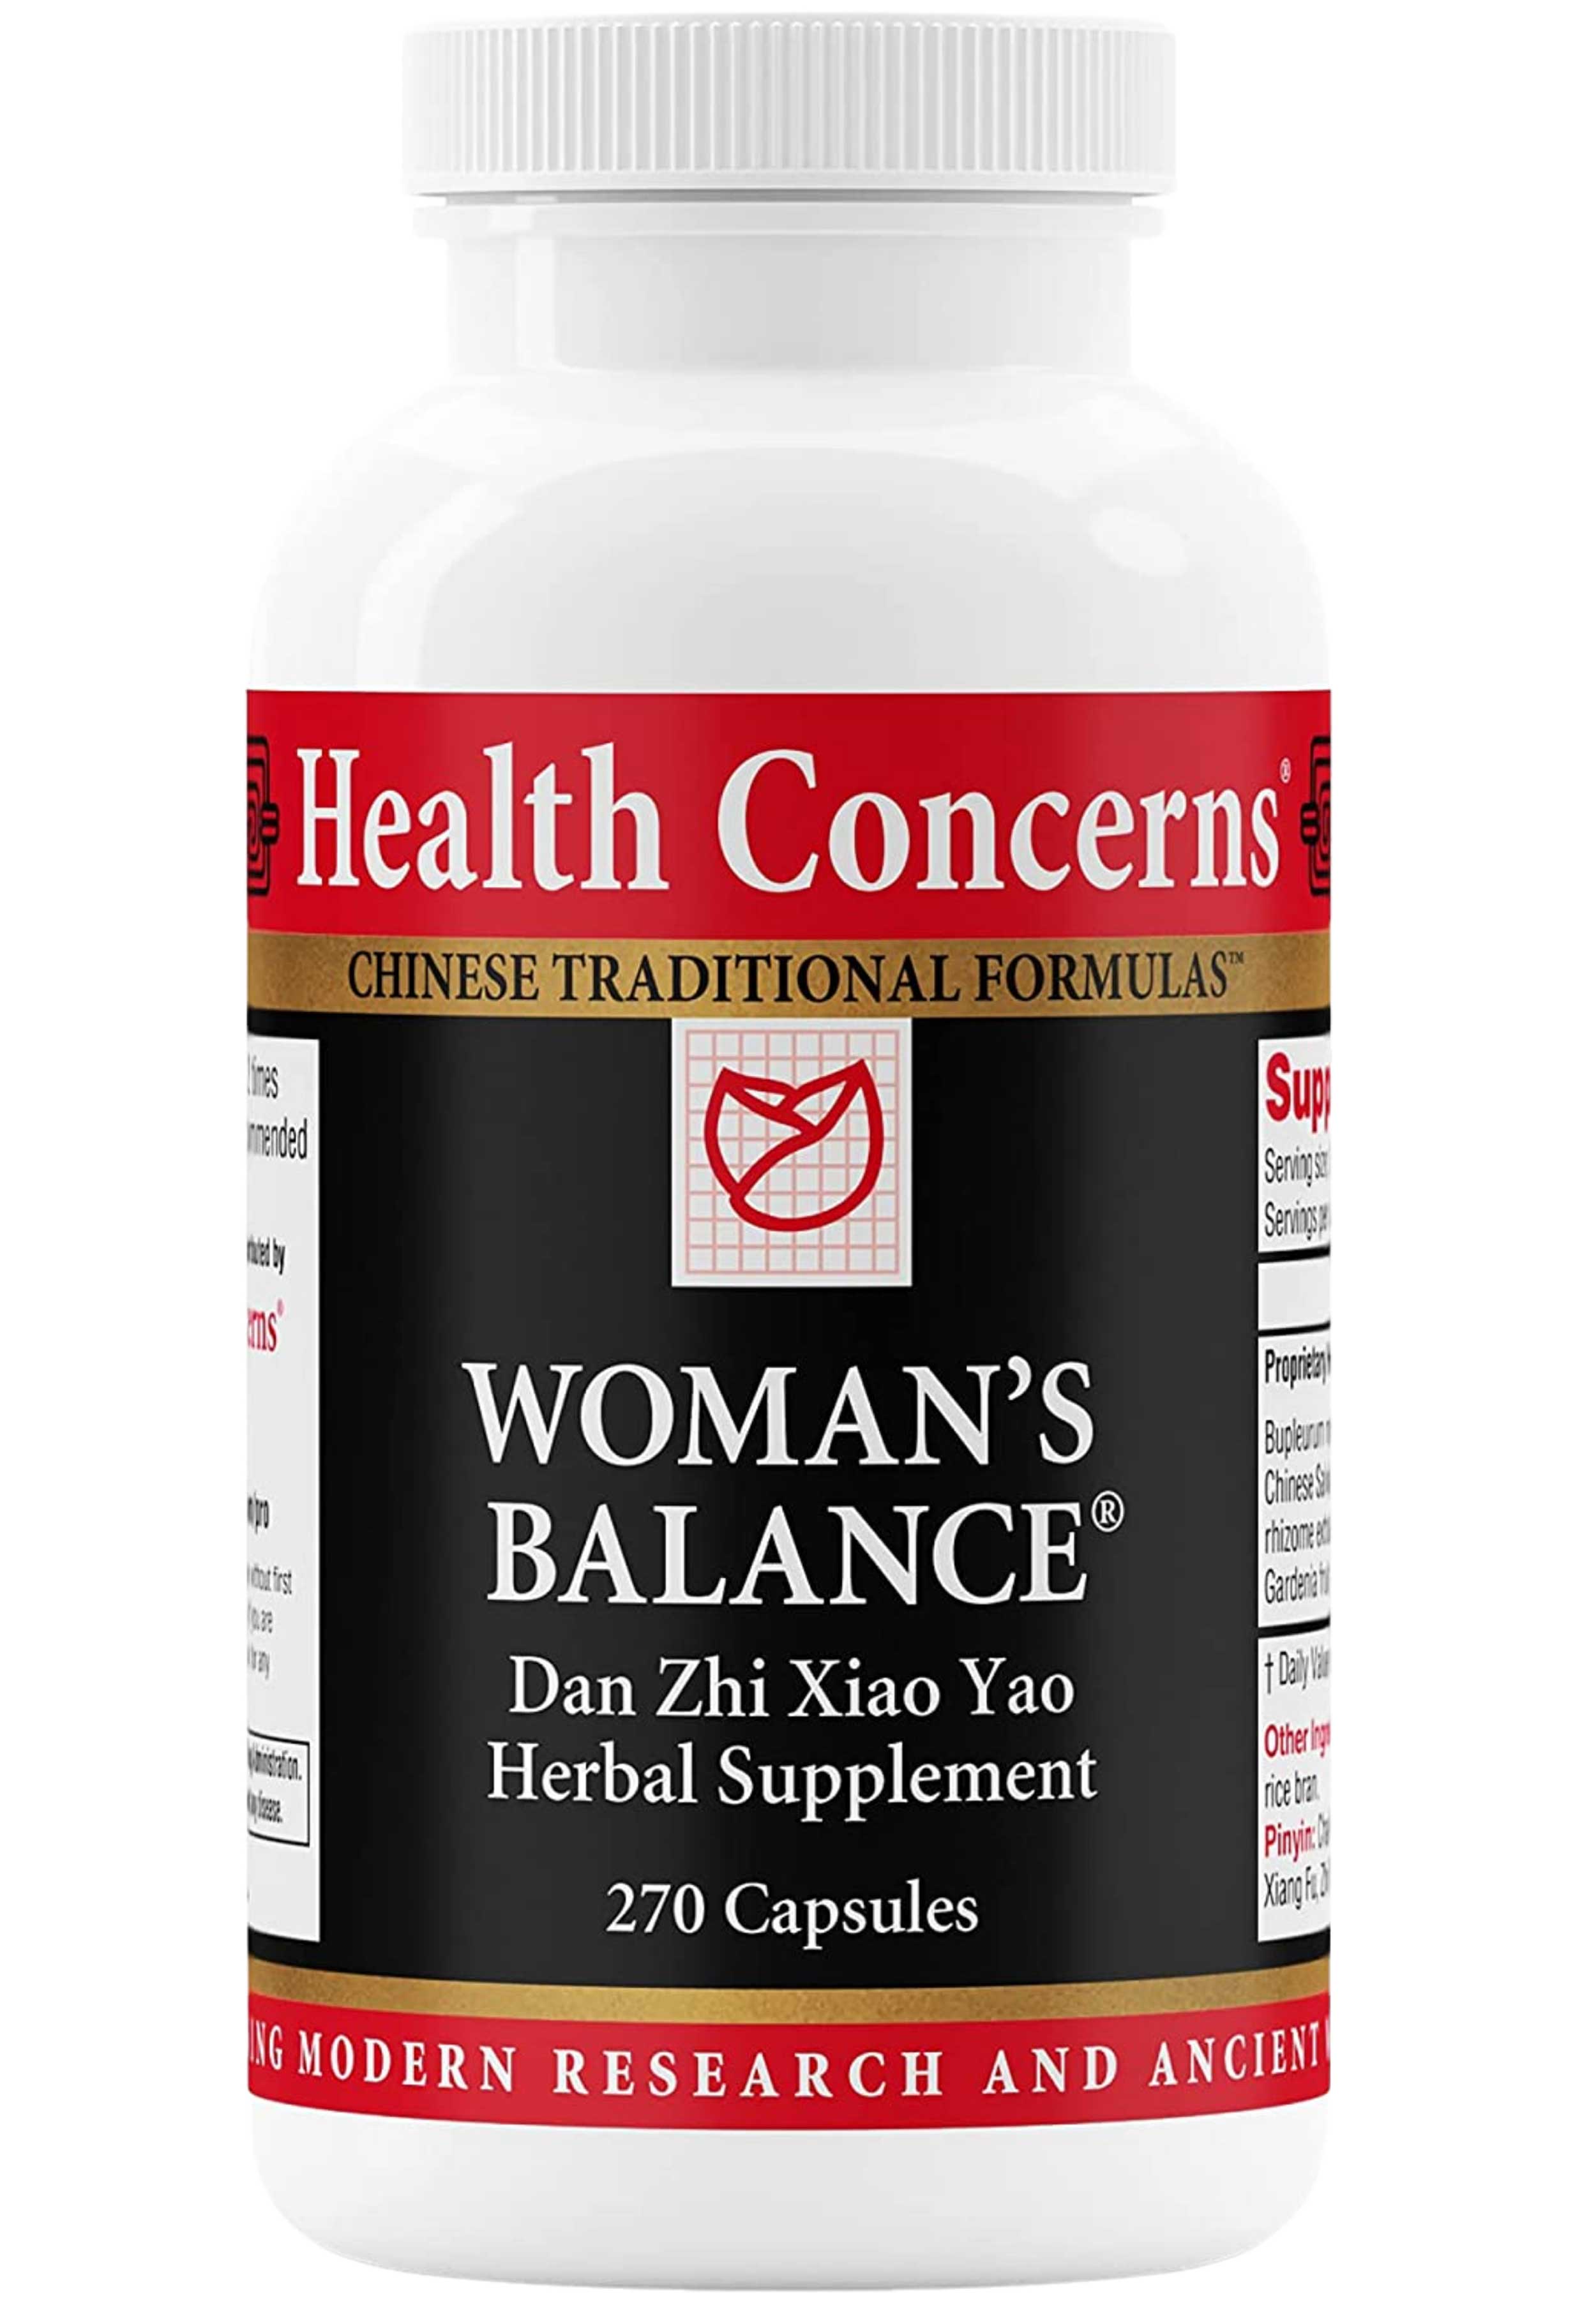 Health Concerns Woman's Balance